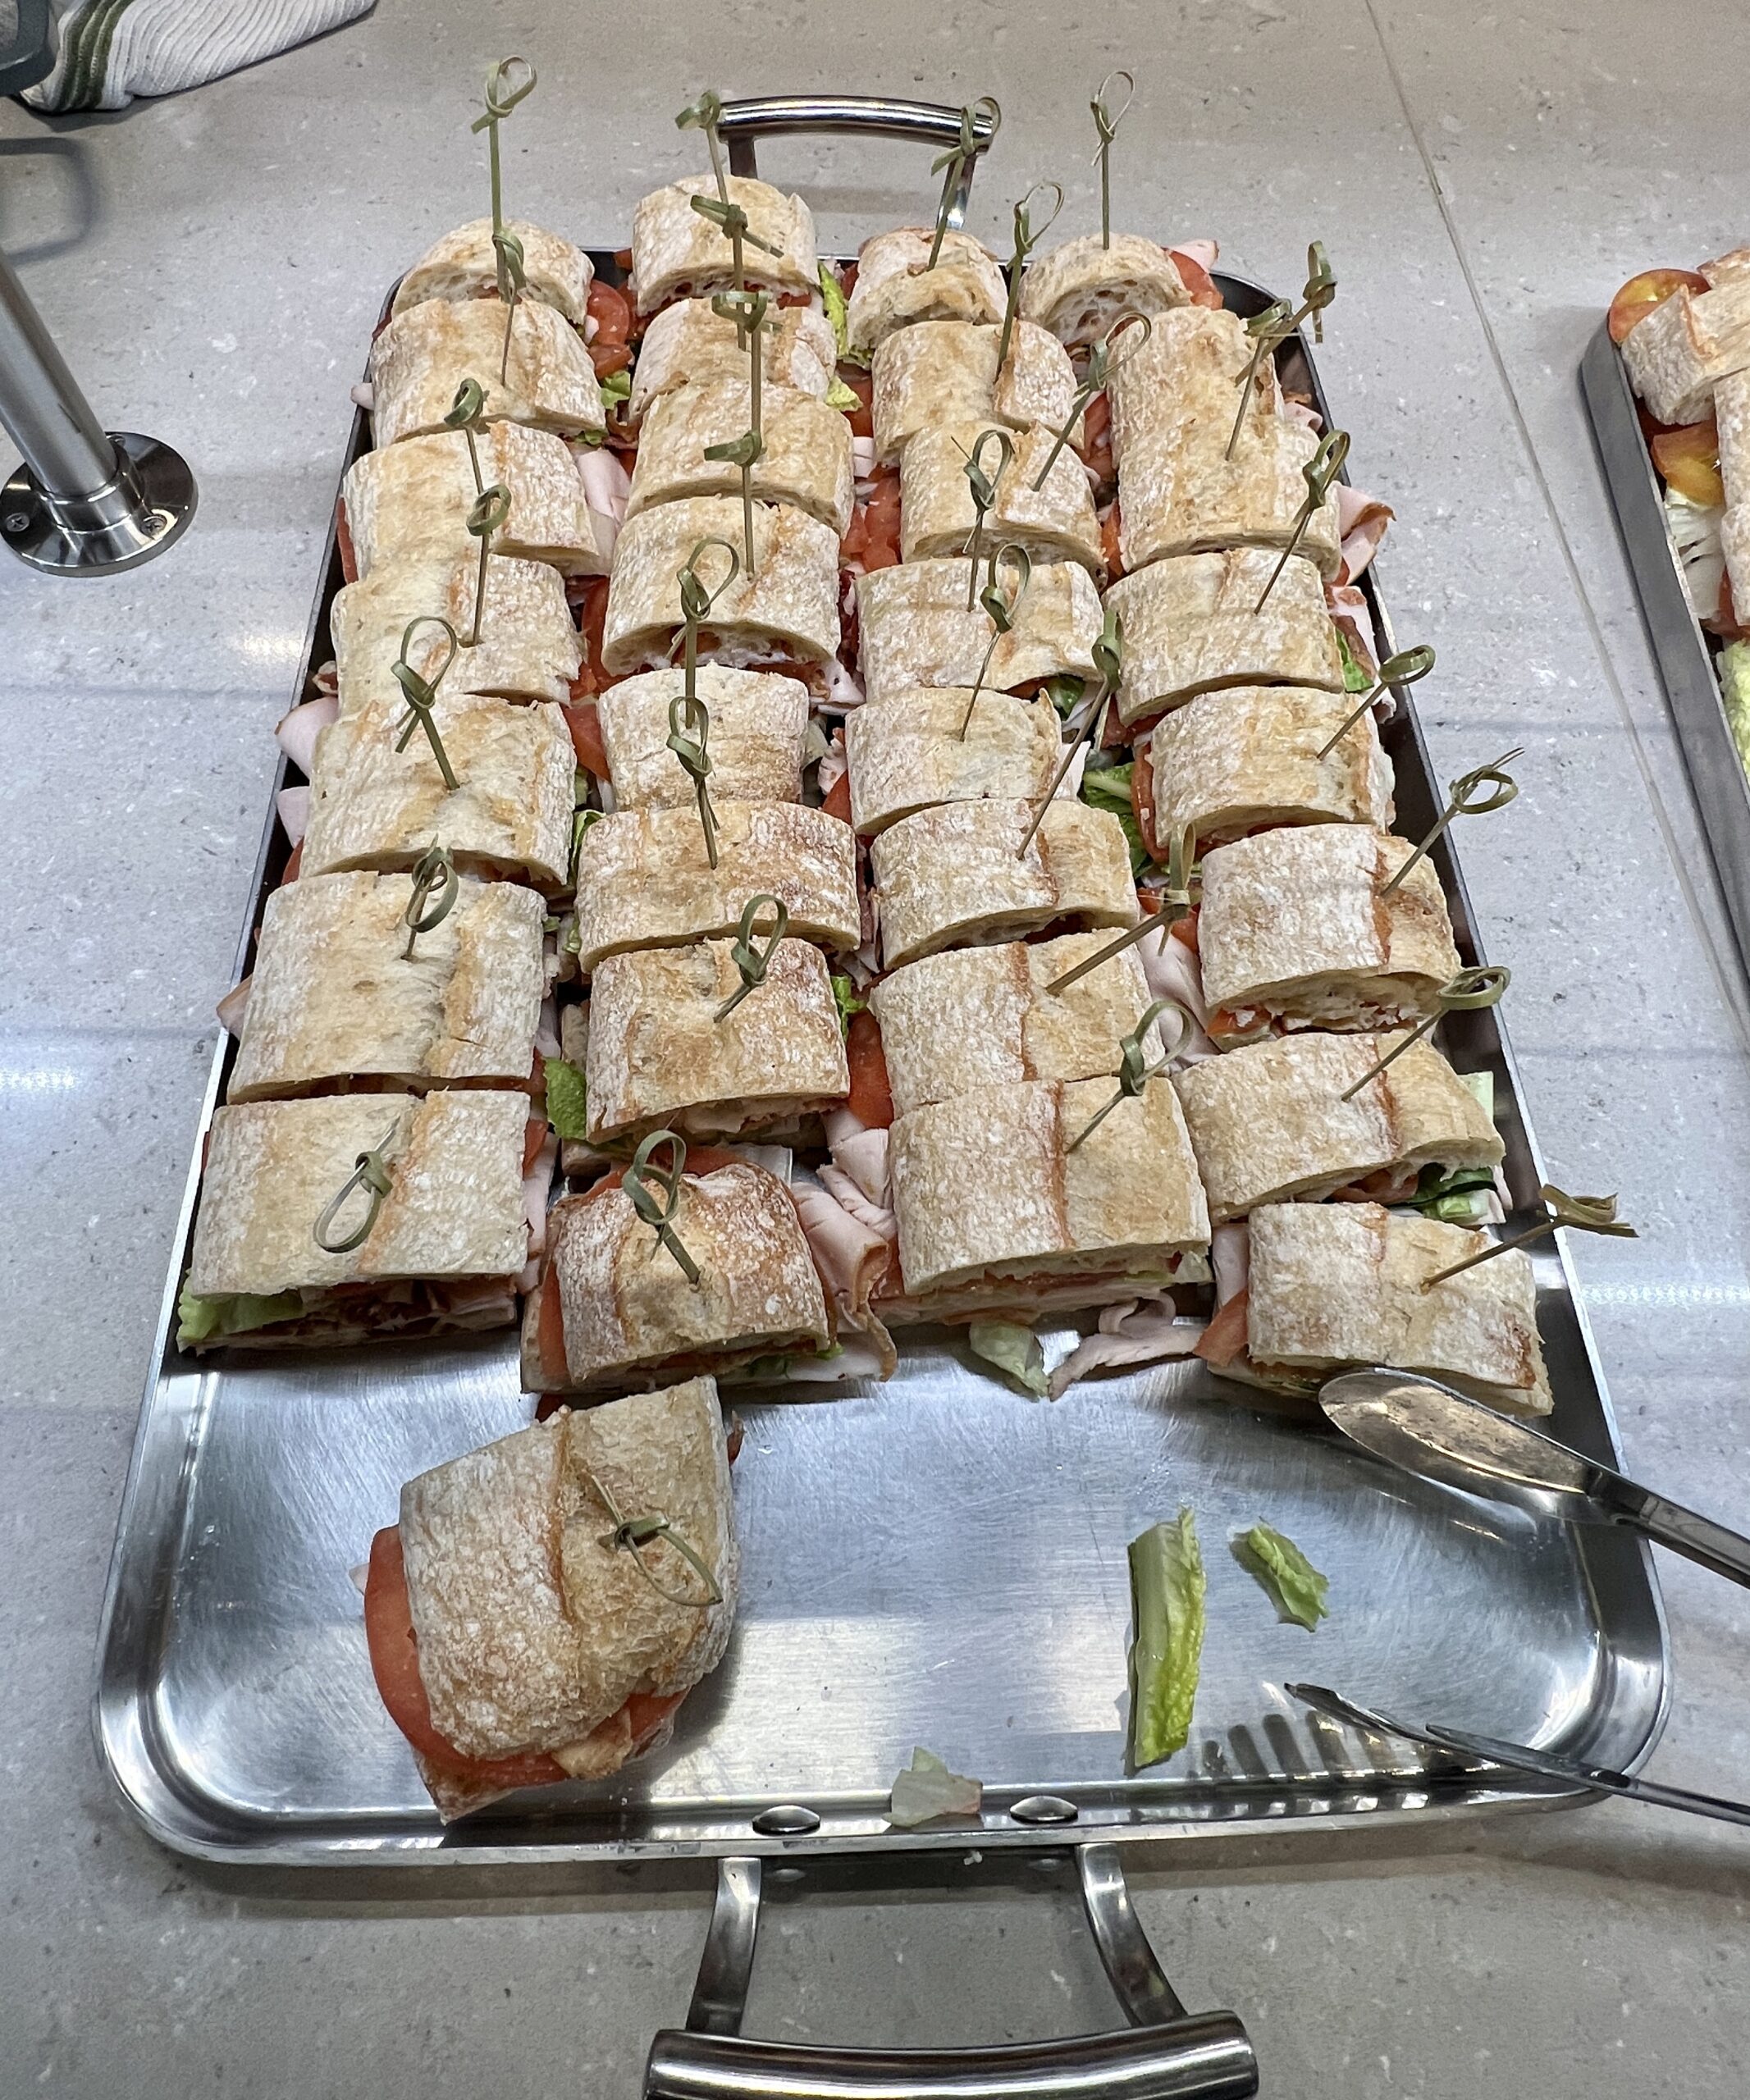 UA C10 Sandwiches